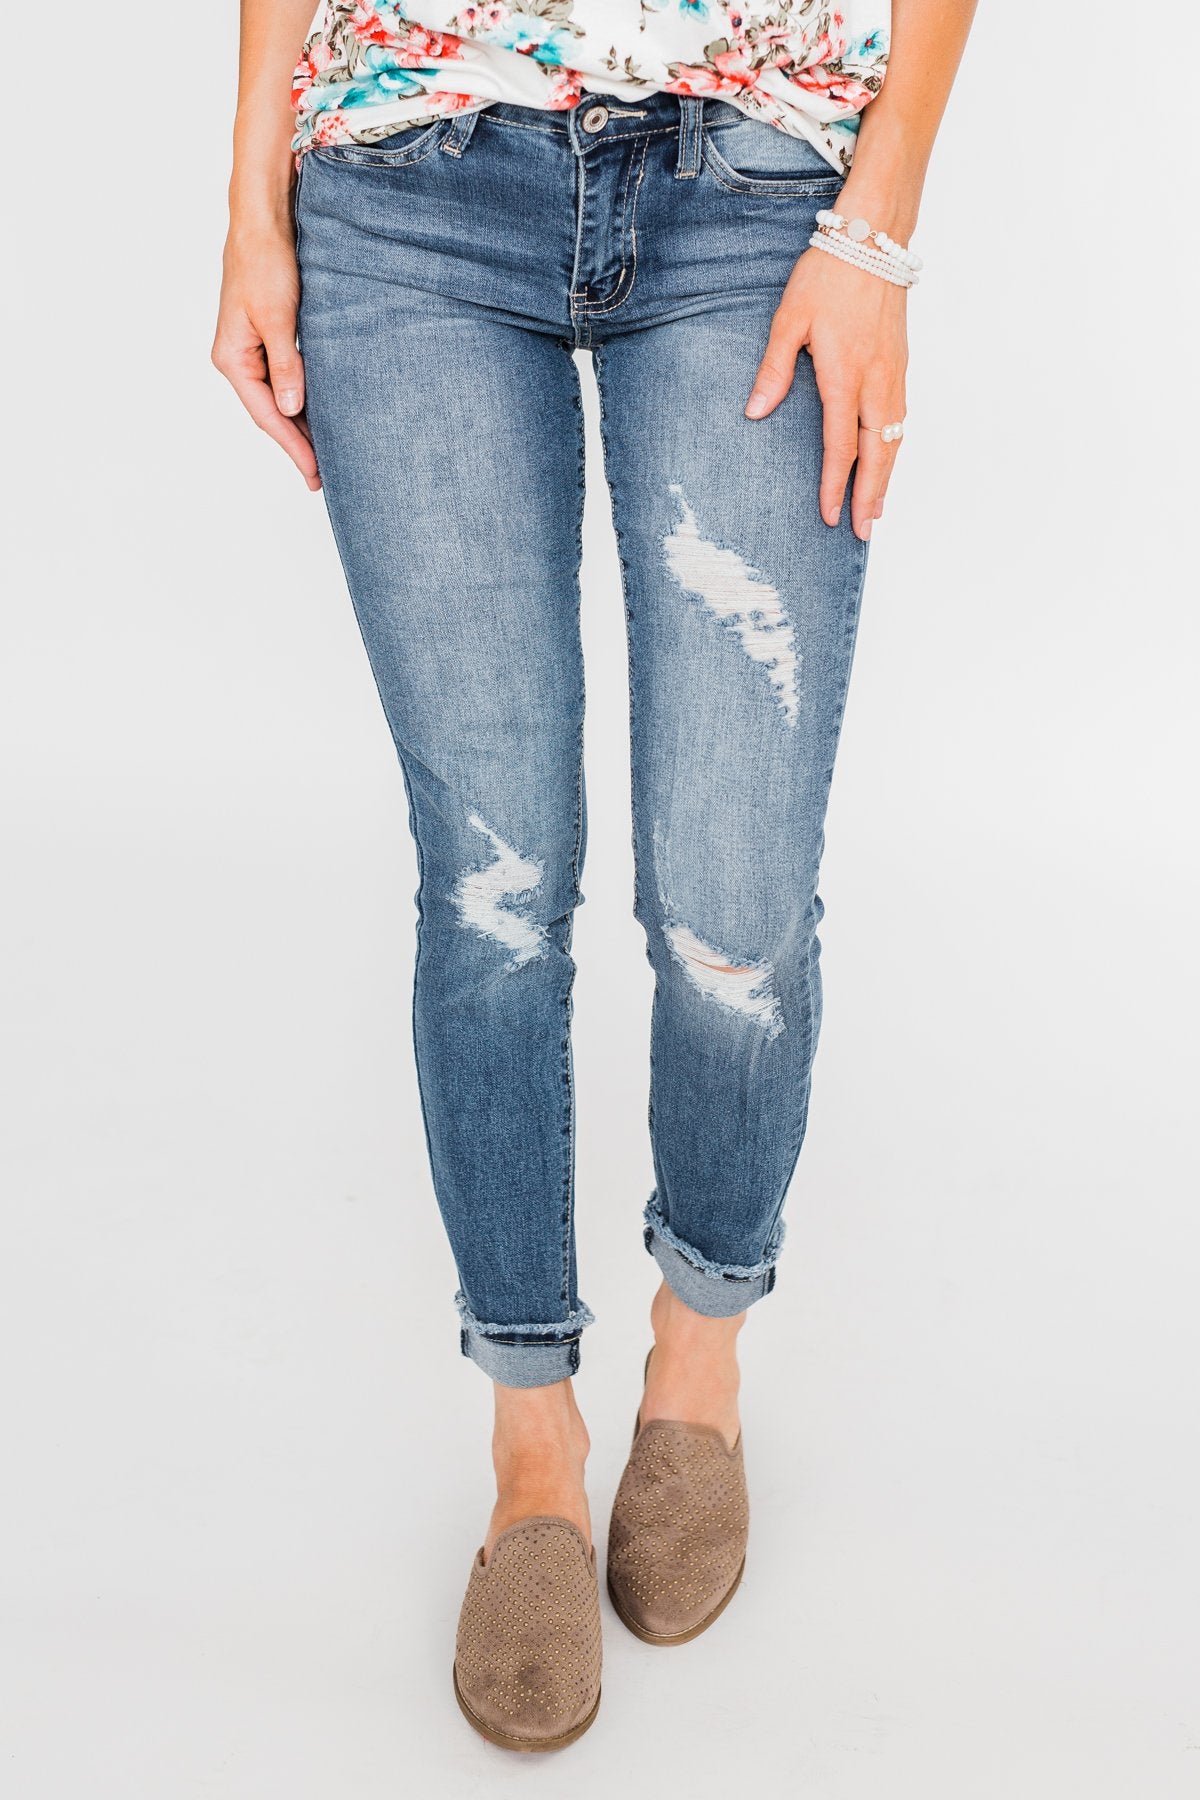 KanCan Jeans- Lexi Medium Wash